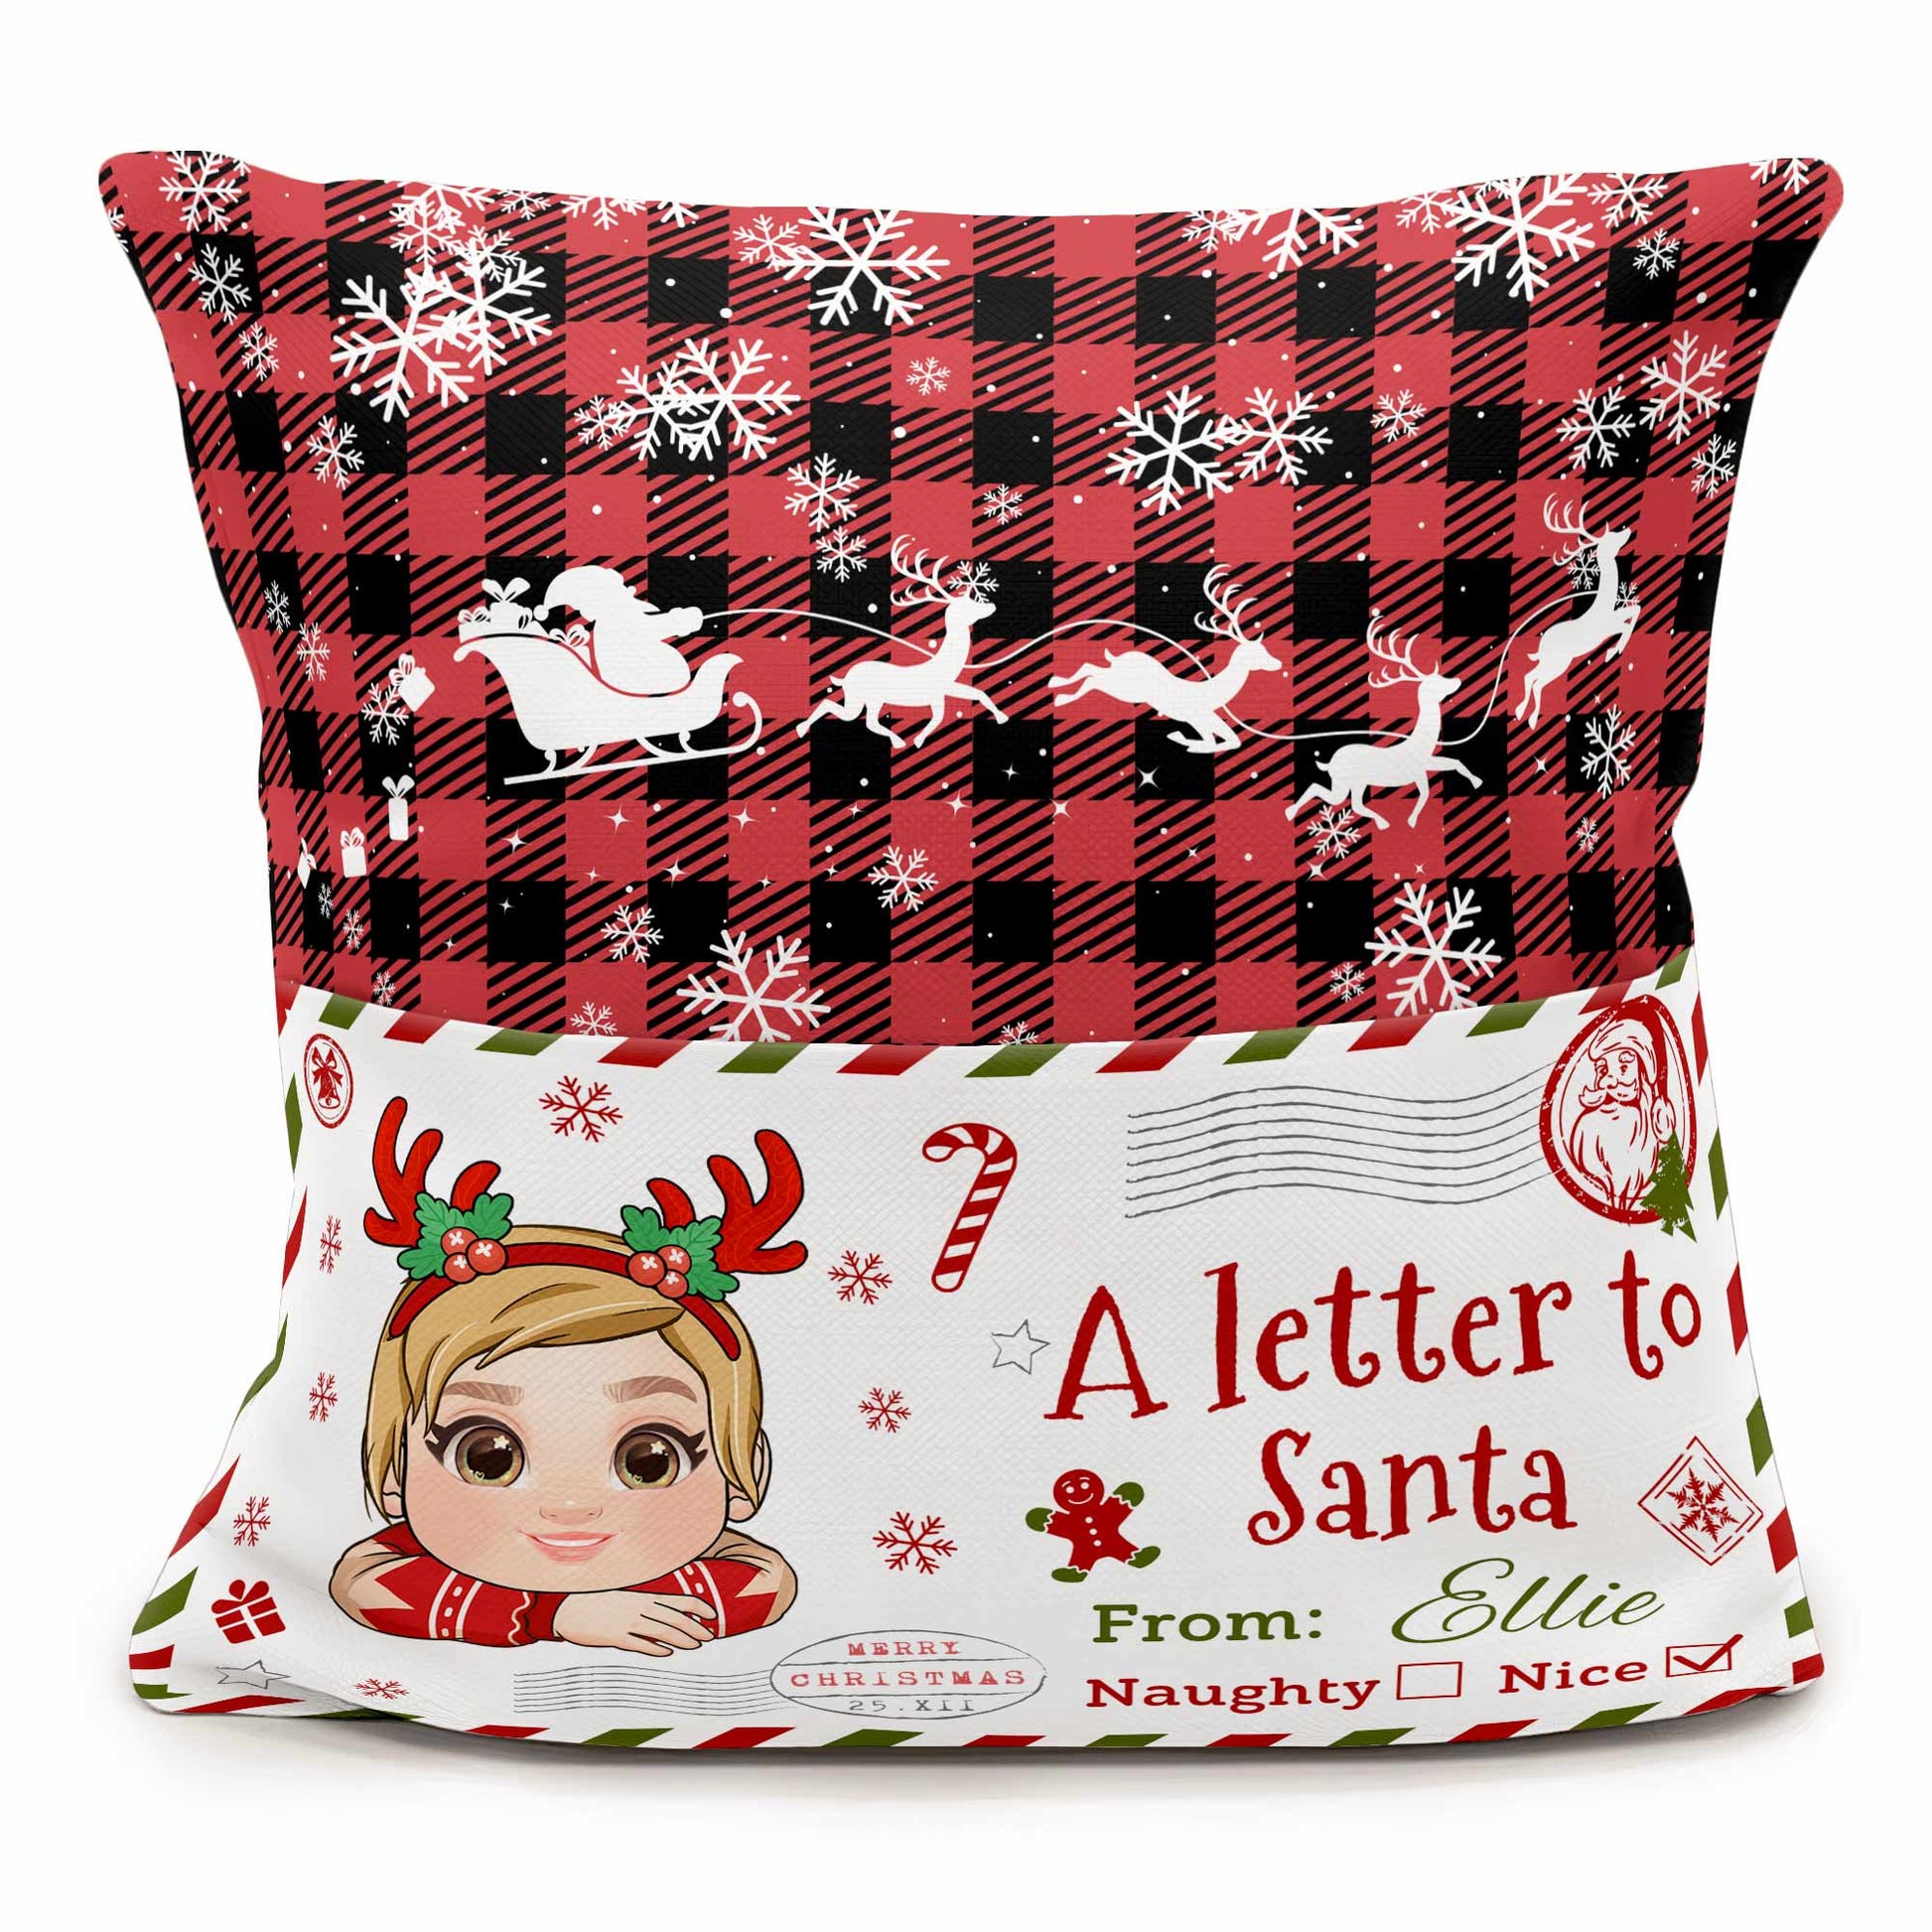 Grandma Postcard - Personalized Pillow (Insert Included) - Christmas G –  Macorner